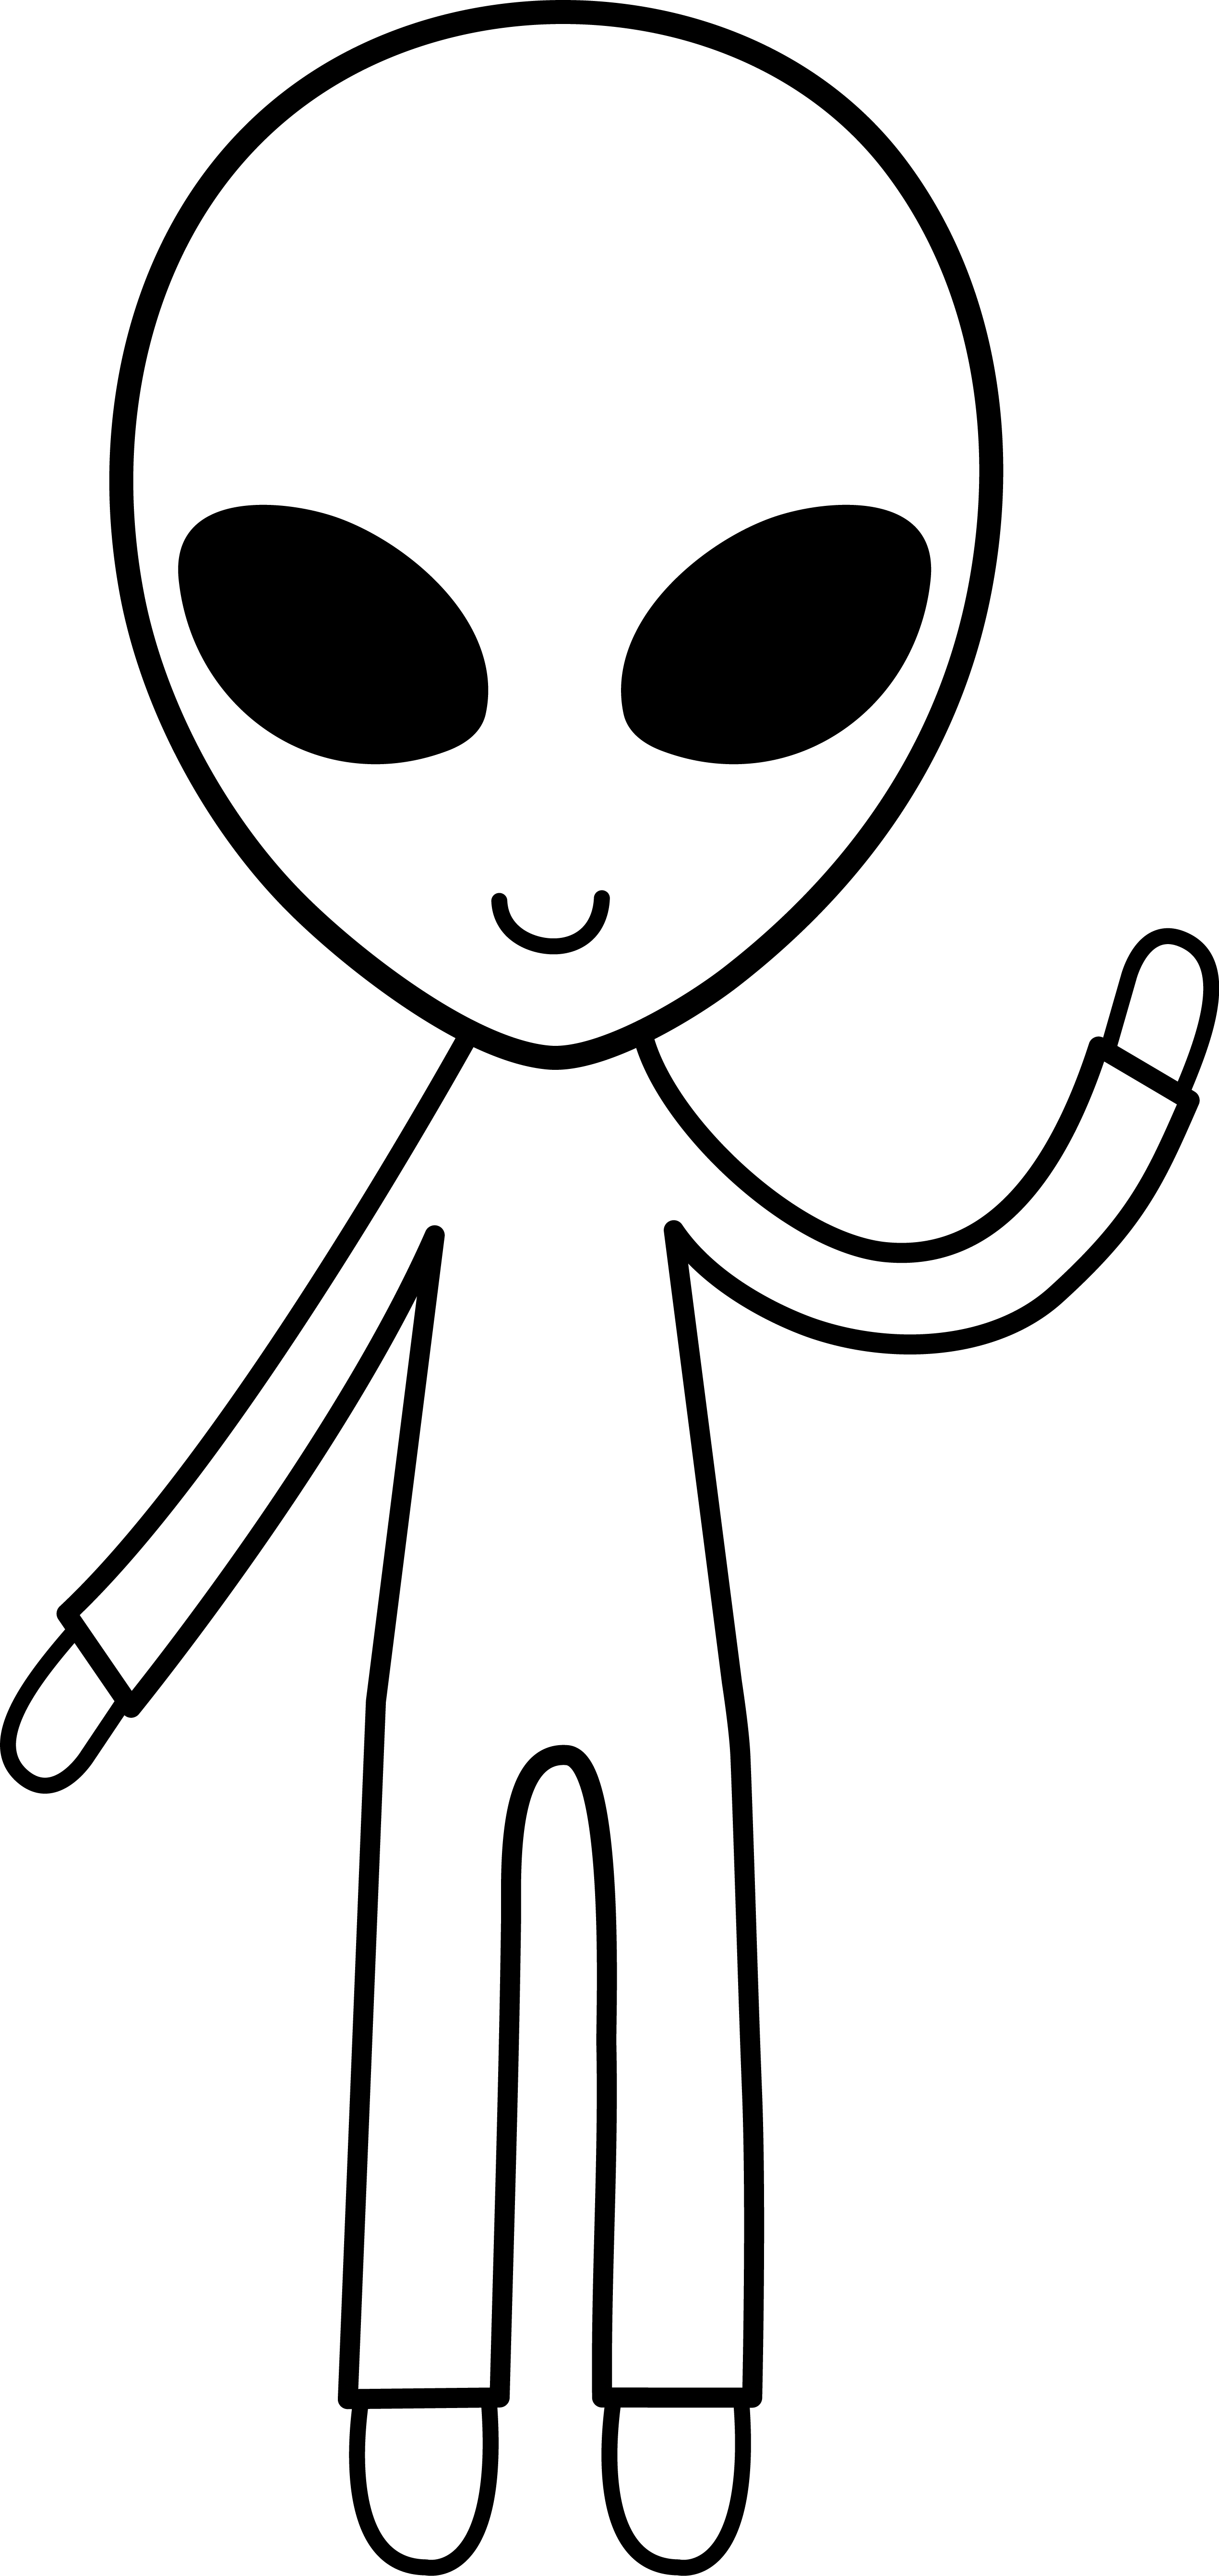 Alien black and white. Nose clipart illustration